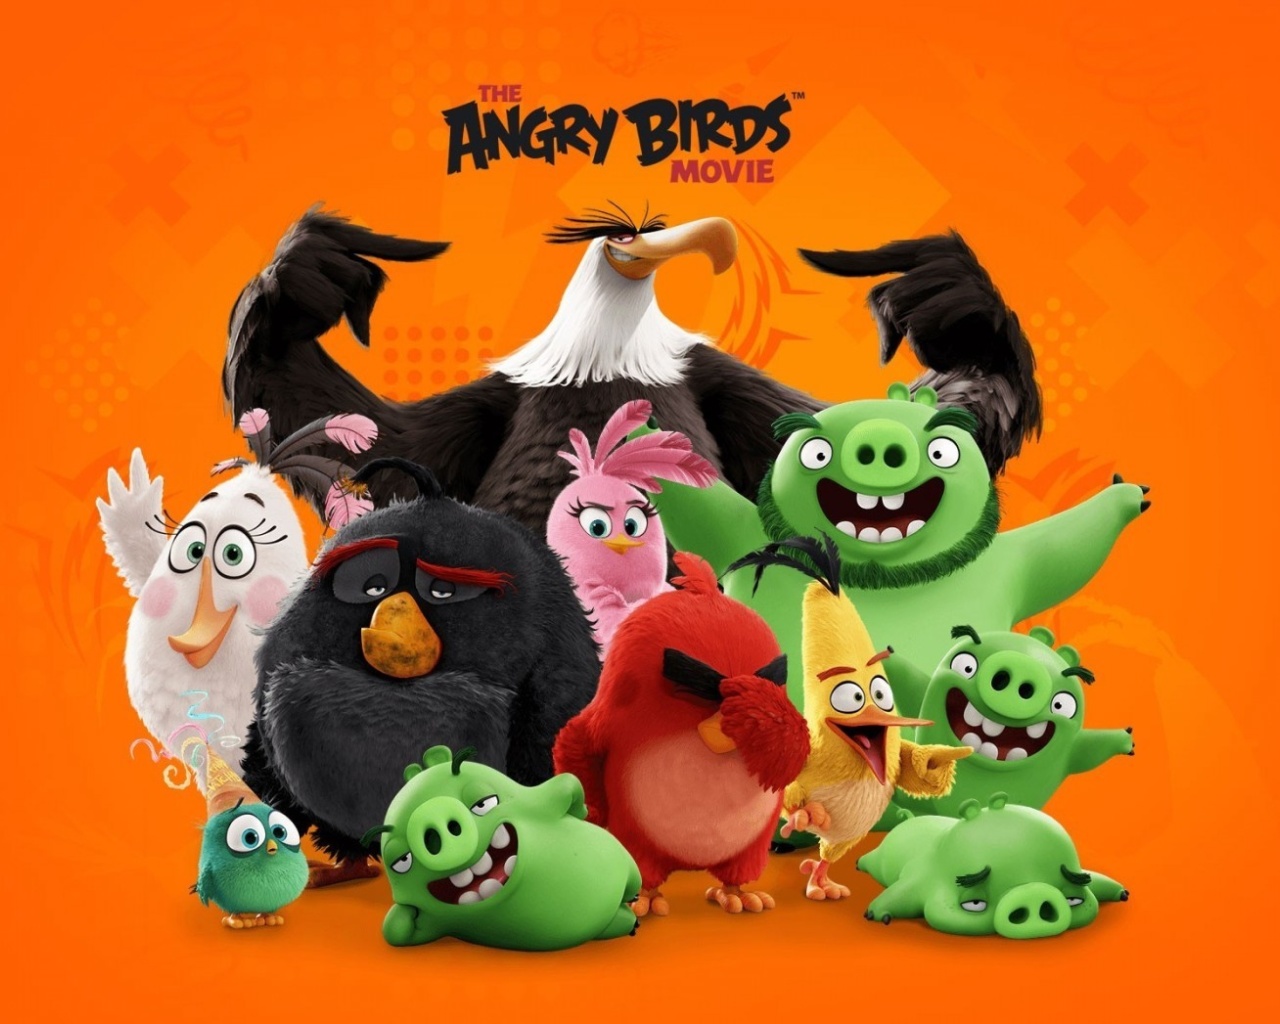 Fondo de pantalla Angry Birds the Movie Release by Rovio 1280x1024